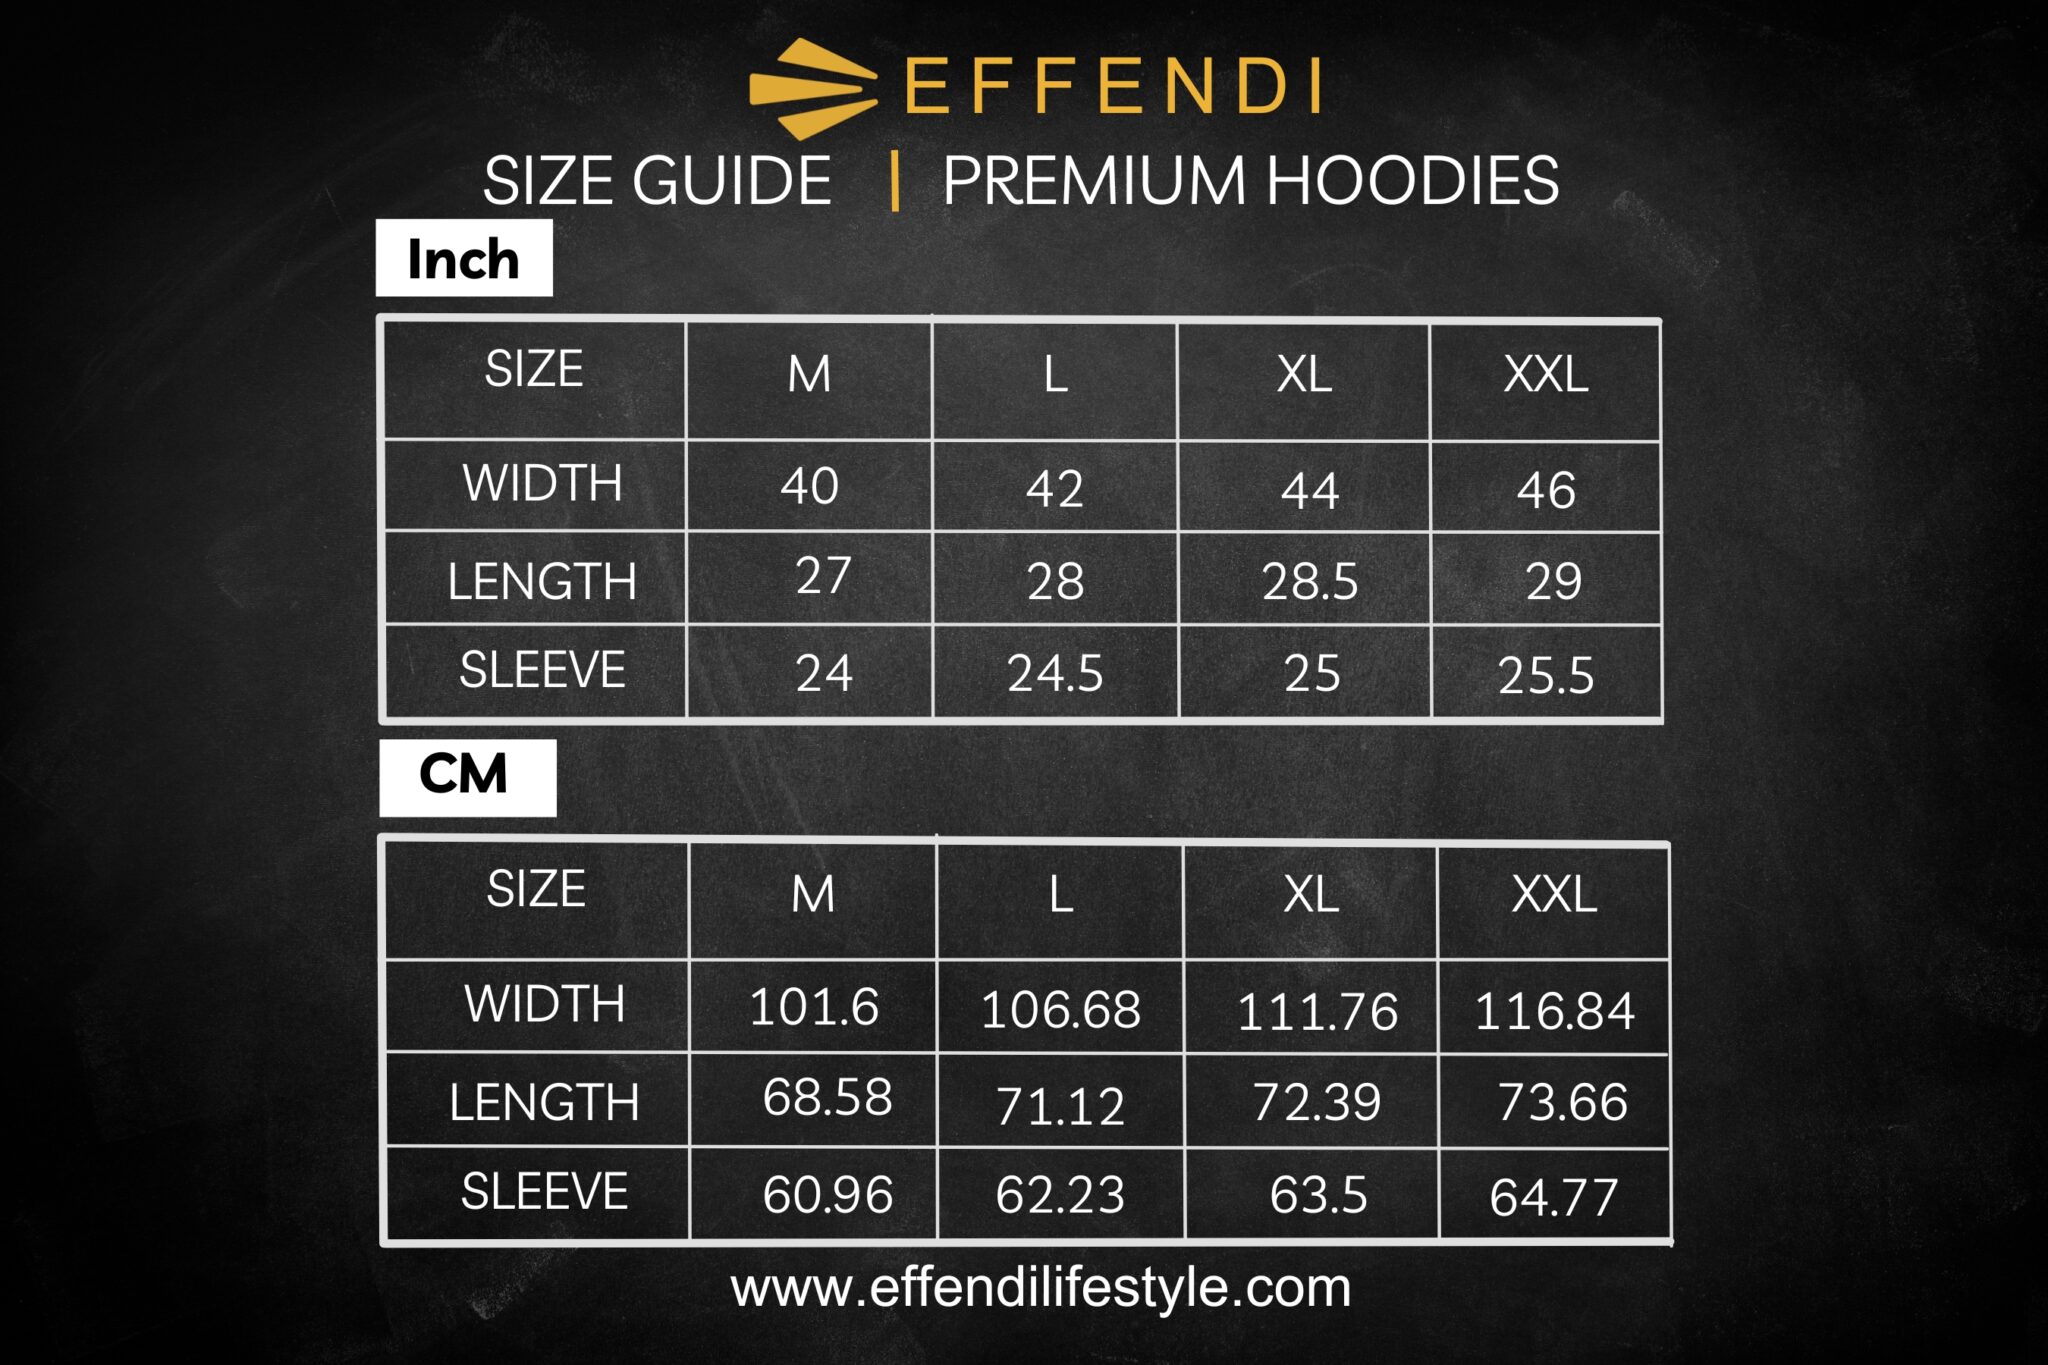 EFFENDI hoodies size guide